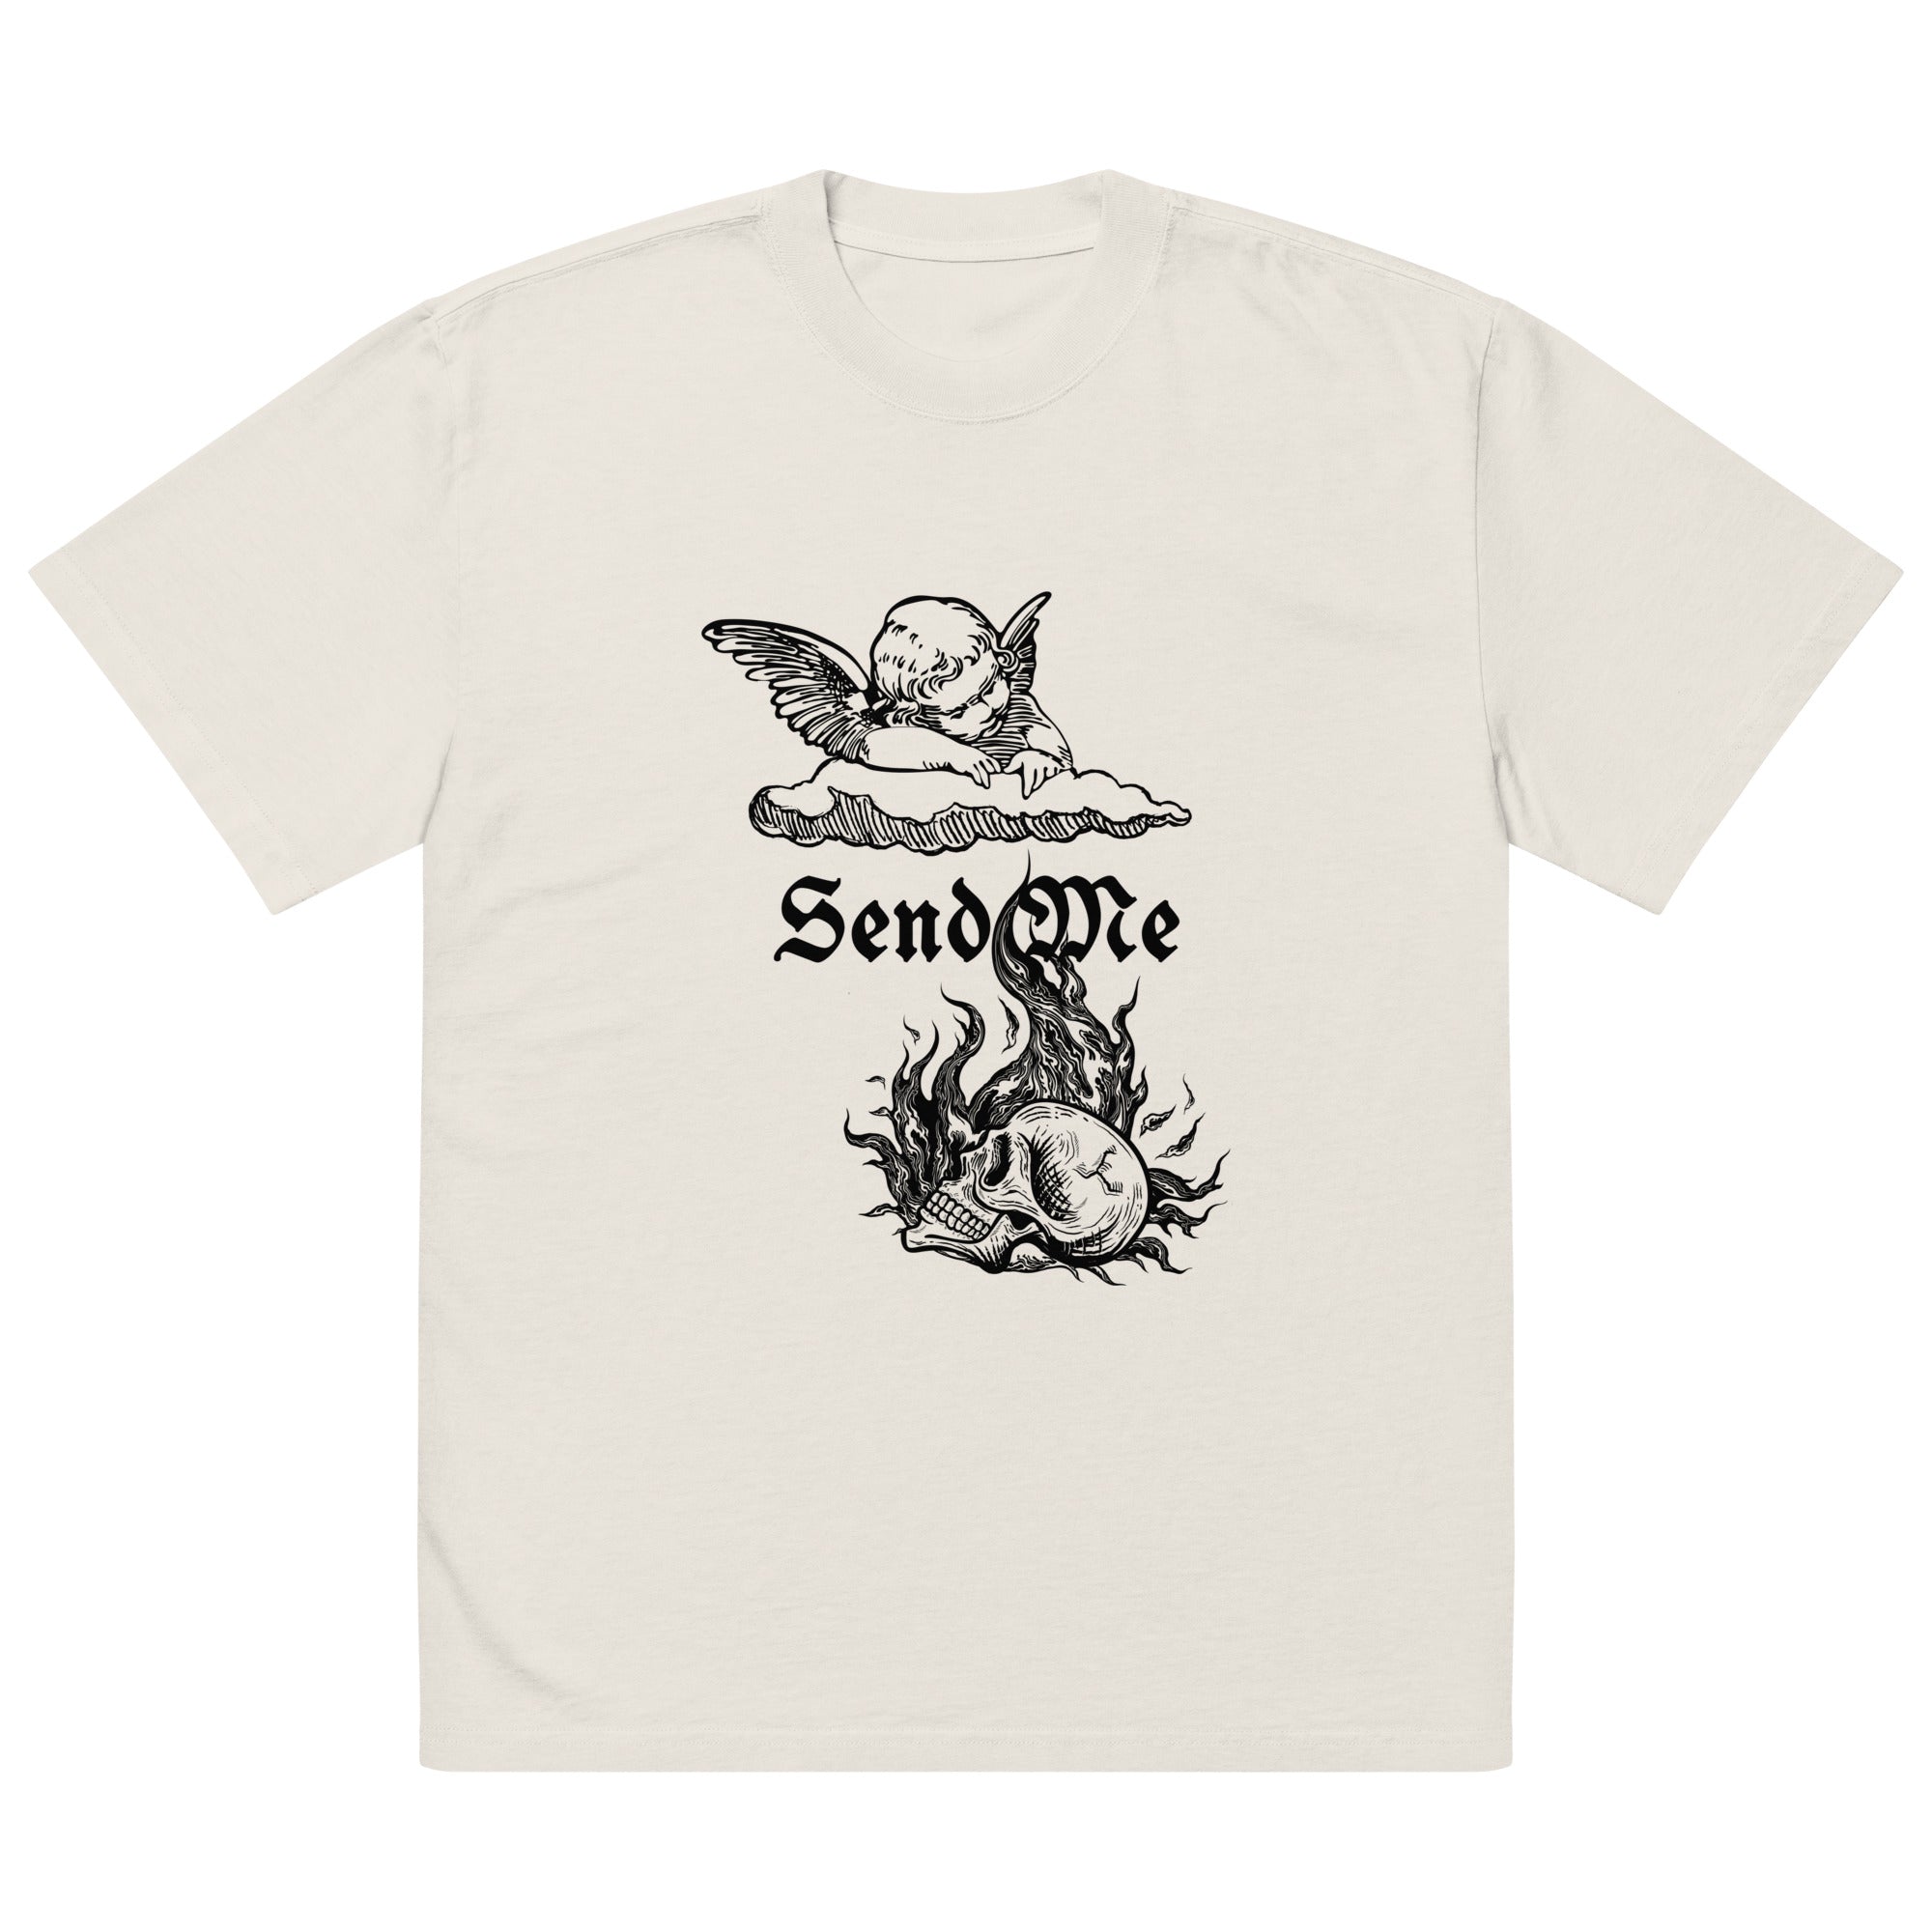 Send Me T-Shirt